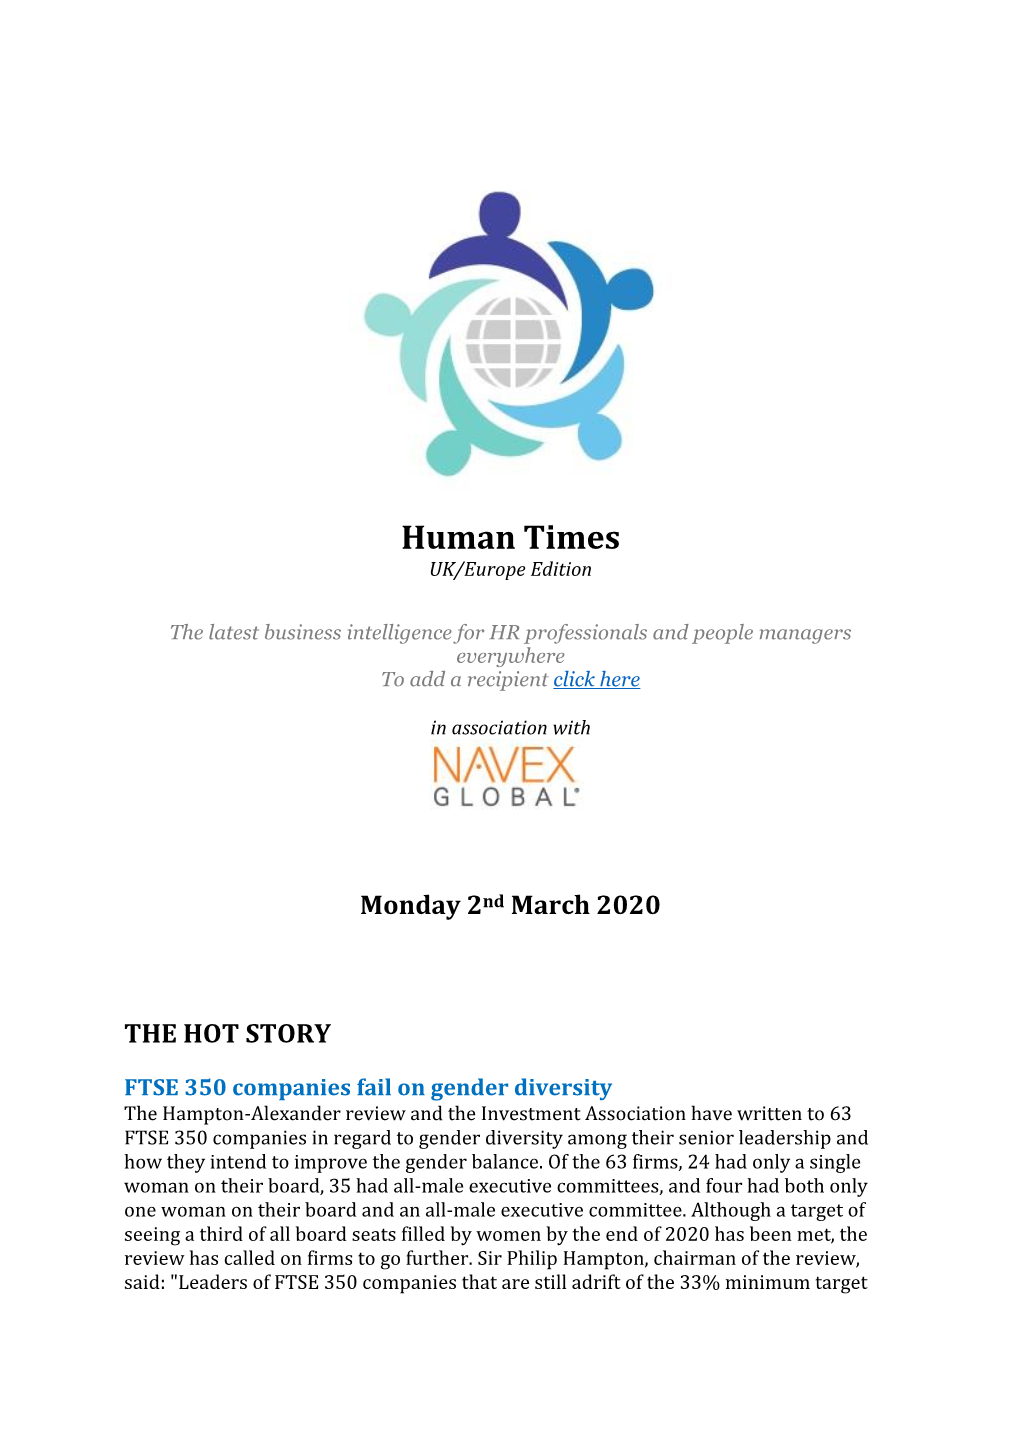 Human Times UK/Europe Edition